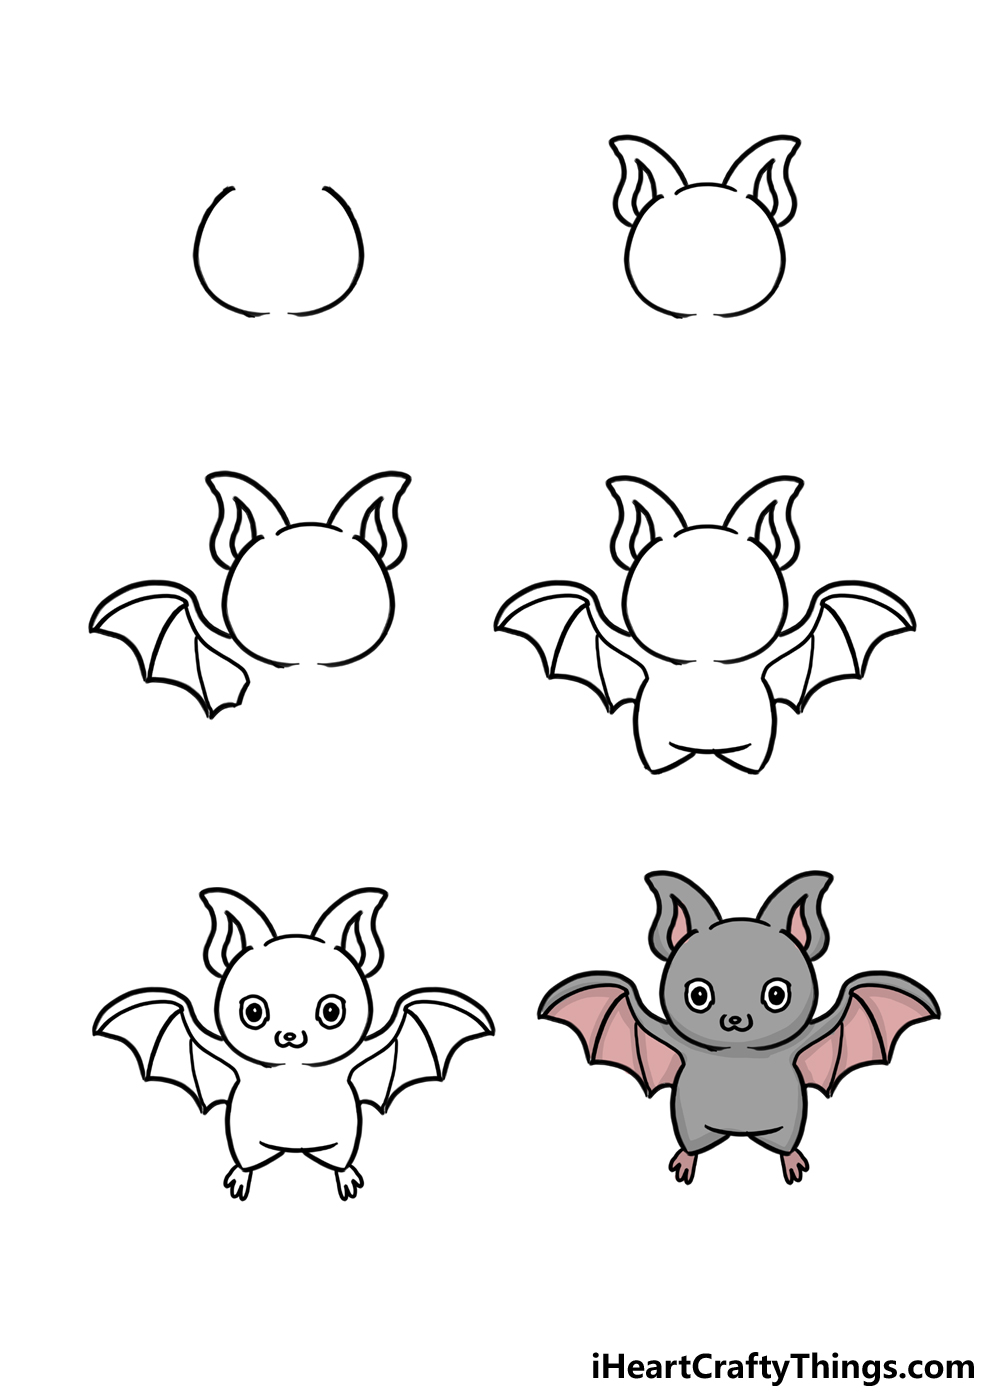 How to Draw A Cute Bat